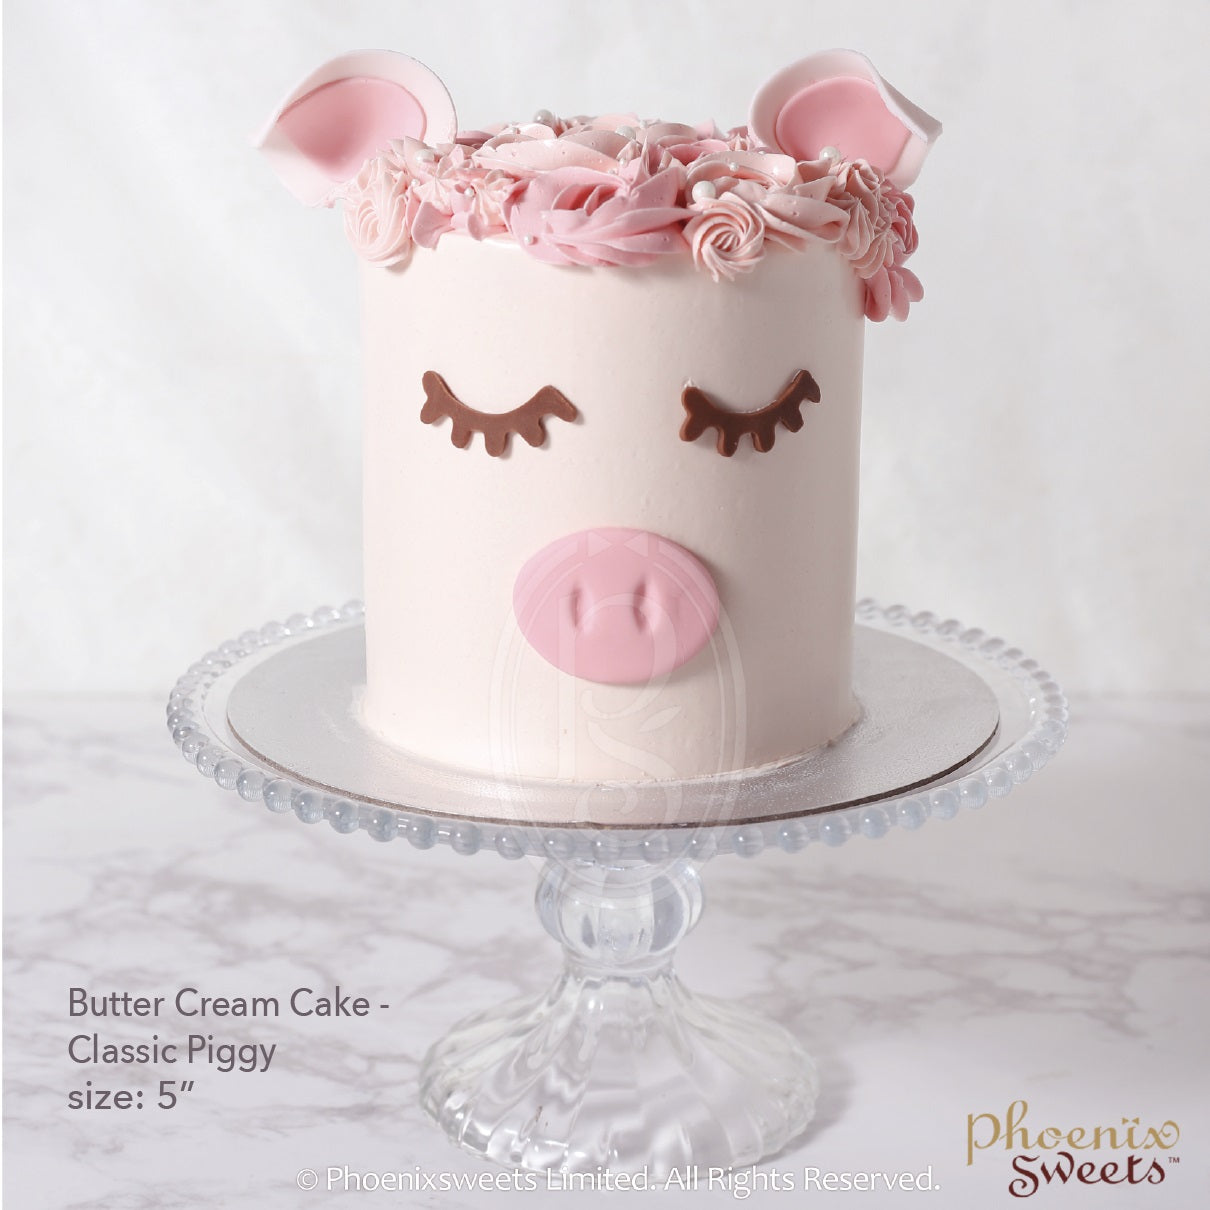 Butter cream cake  - classic piggy,  Bouquet & cake combo $2380